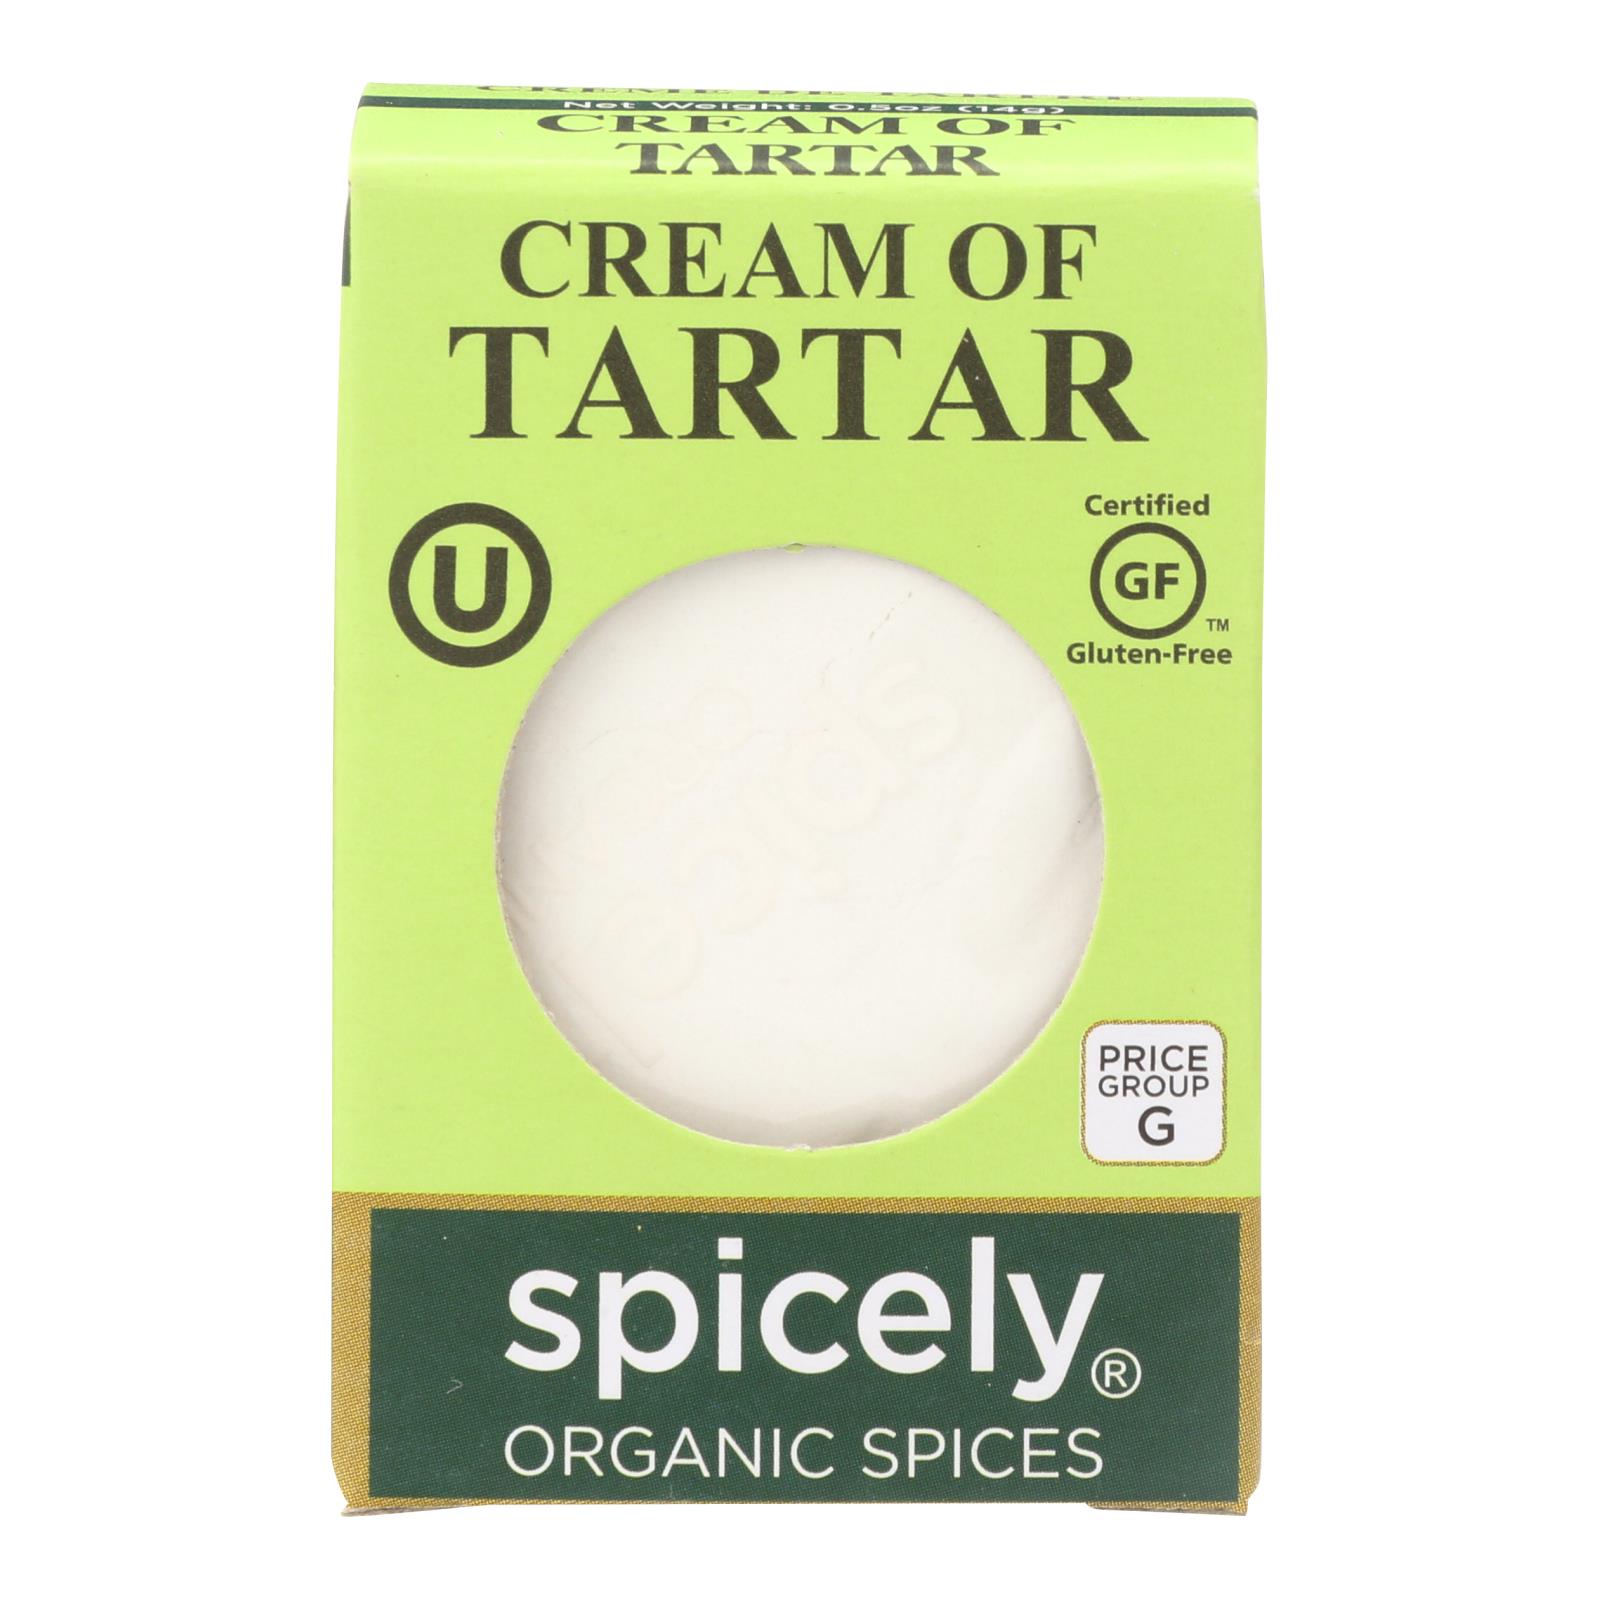 Spicely Organics - Cream of Tartar - 6개 묶음상품 - 0.5 oz.